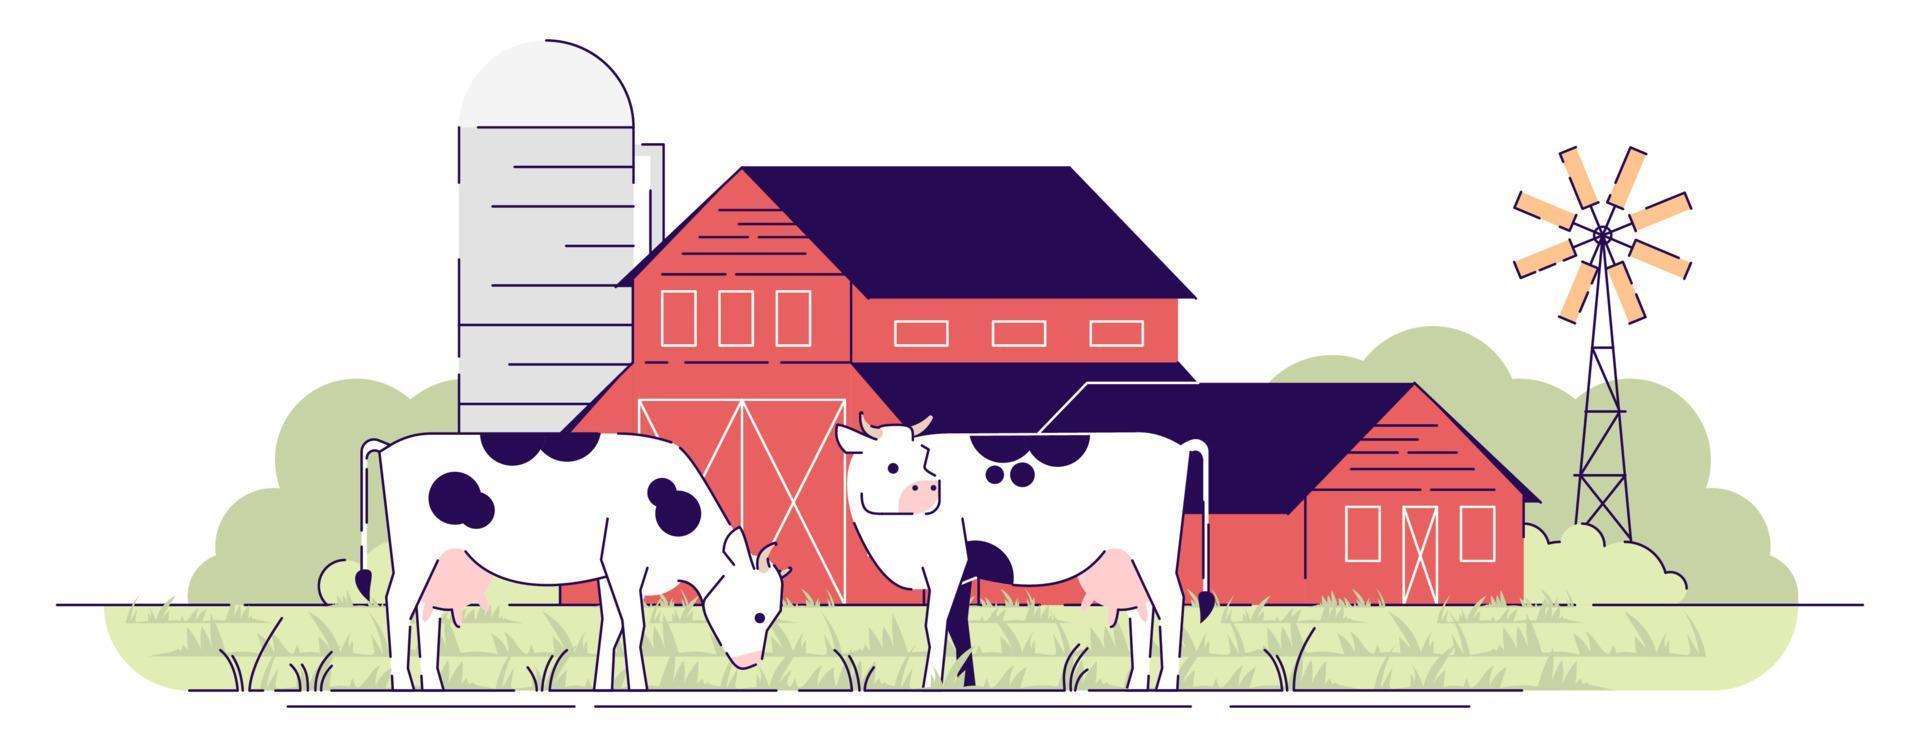 Dairy farm flat vector illustration. Cows grazing on pasture near red barns cartoon design element with outline. Village farmland with barnyard, rural ranch. Livestock farming, animal husbandry